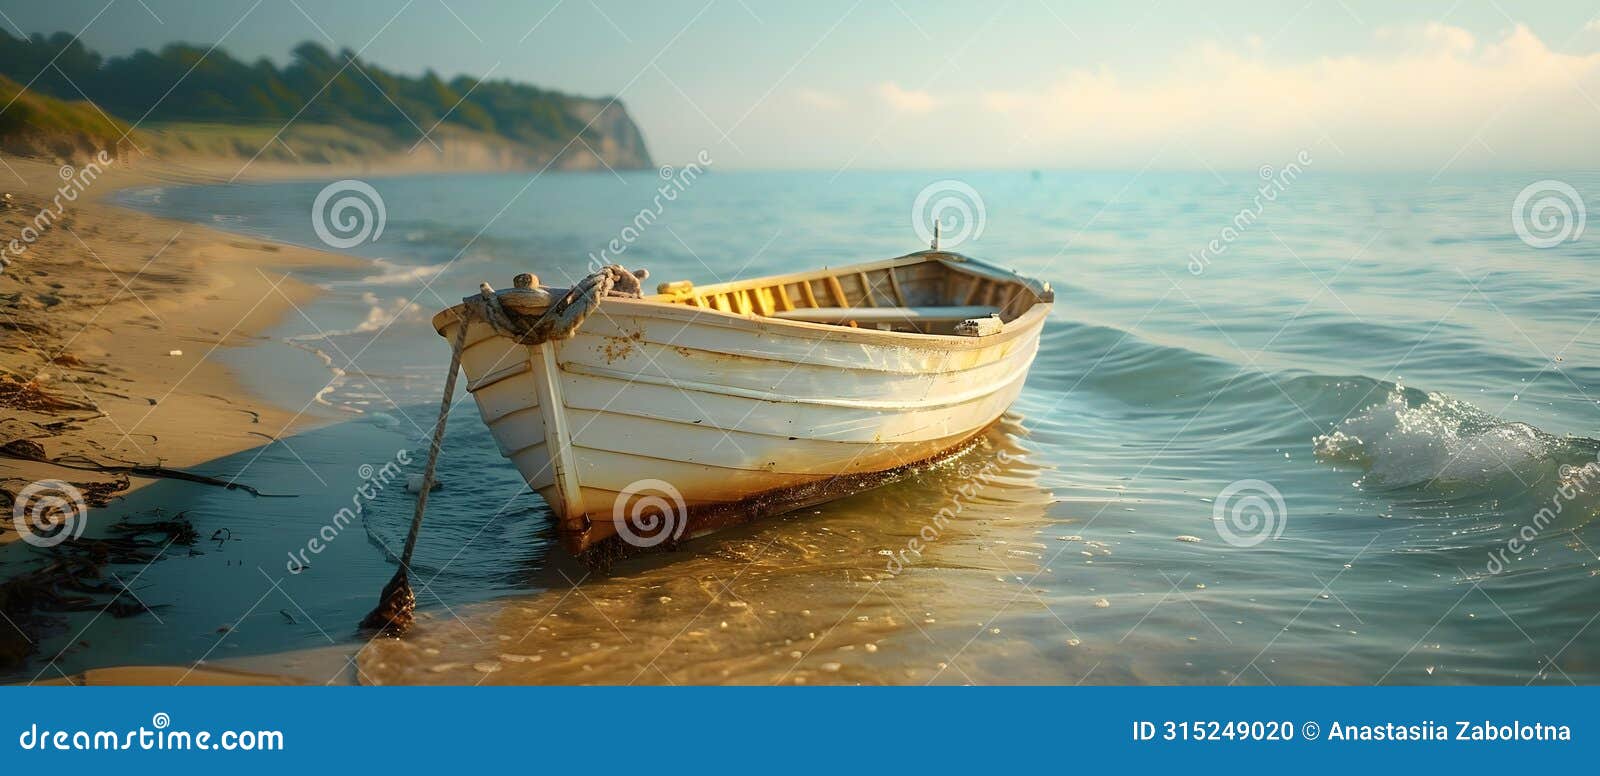 serene shoreline repose with anchored boat. concept beach photography, seaside scene, boat